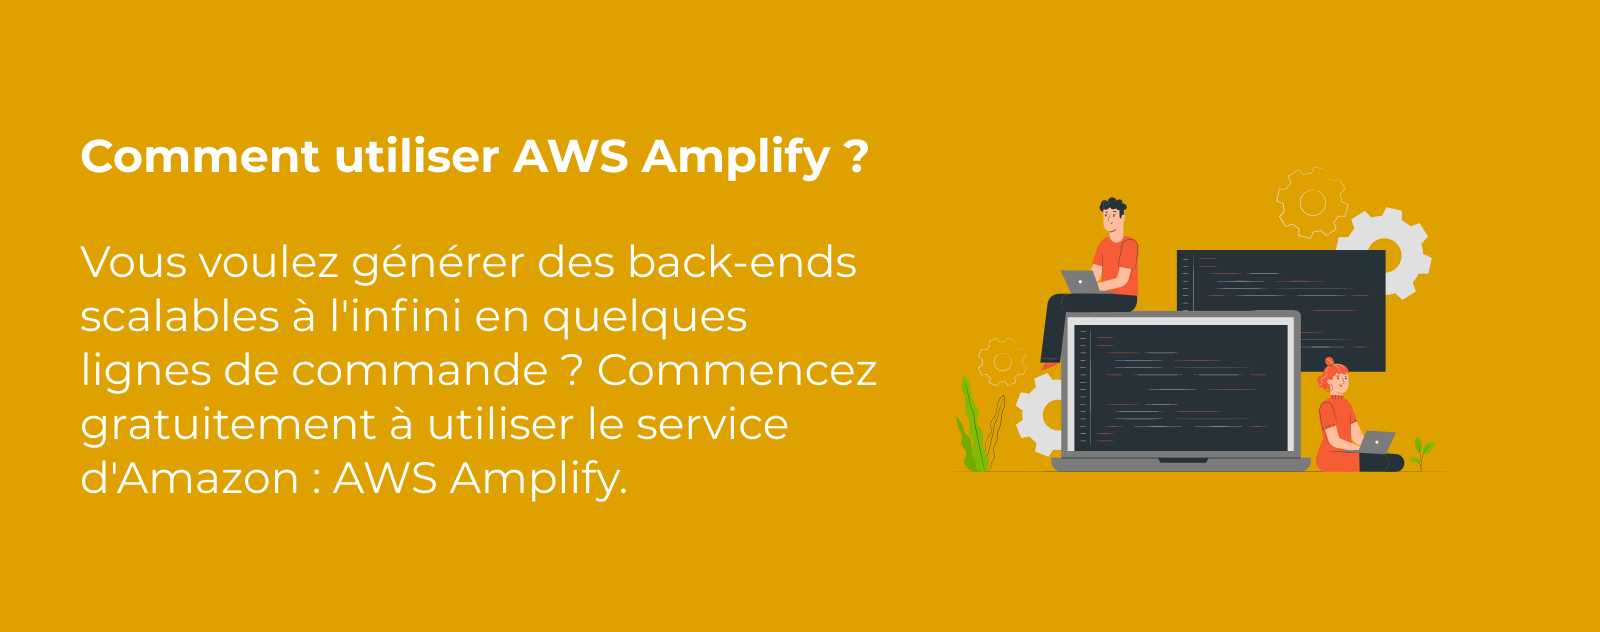 Comment utiliser AWS Amplify ?